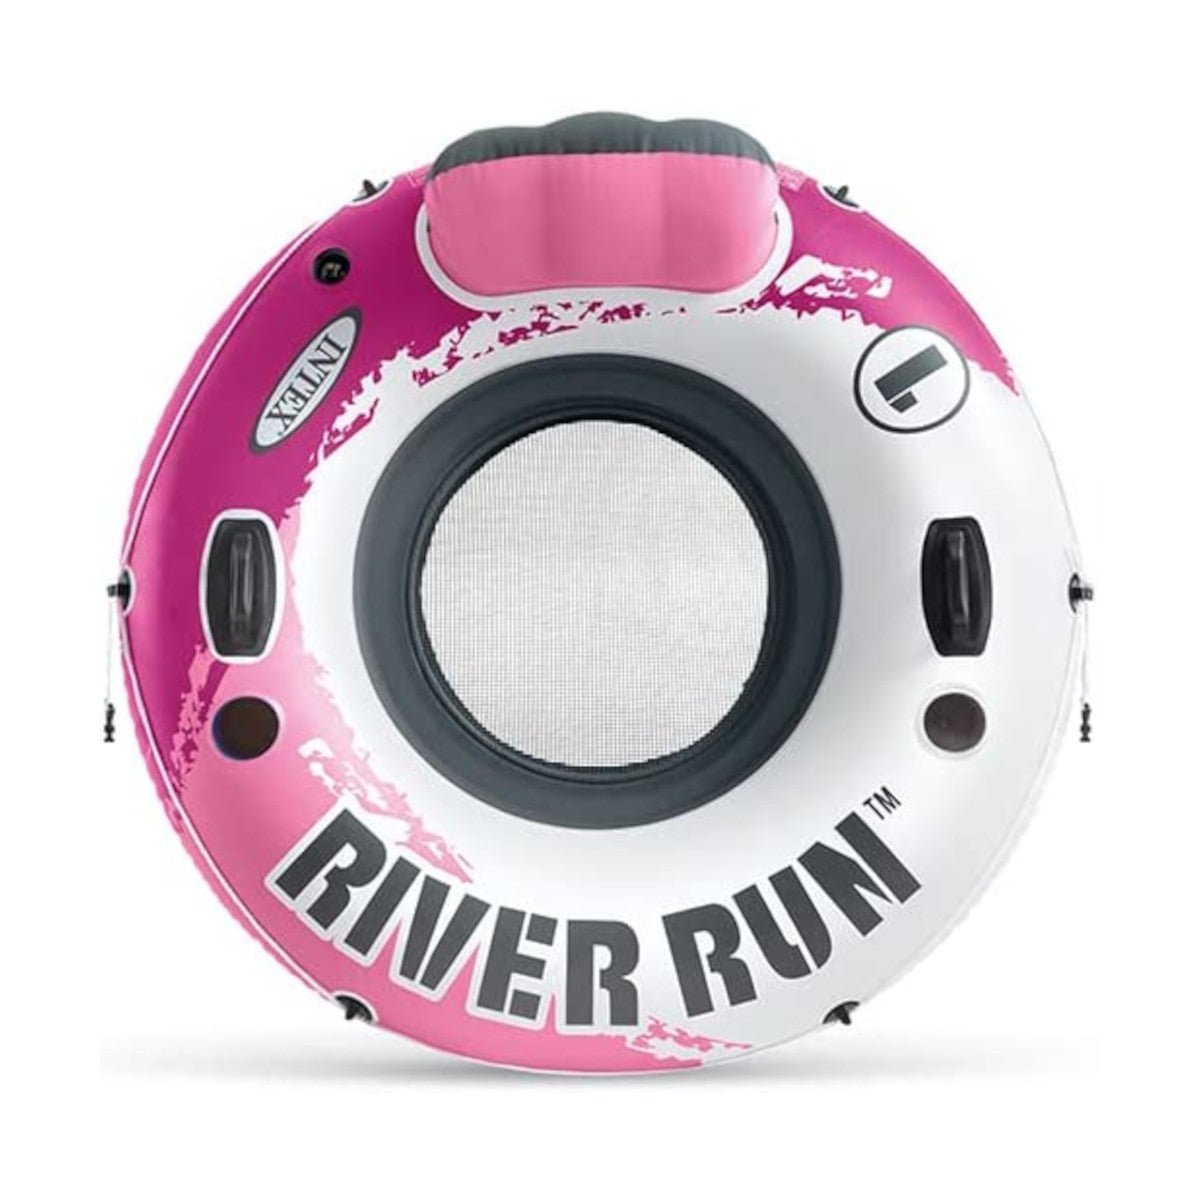 Schwimmring - Pink River Run 1 - Ø135 cm - Poolpirat